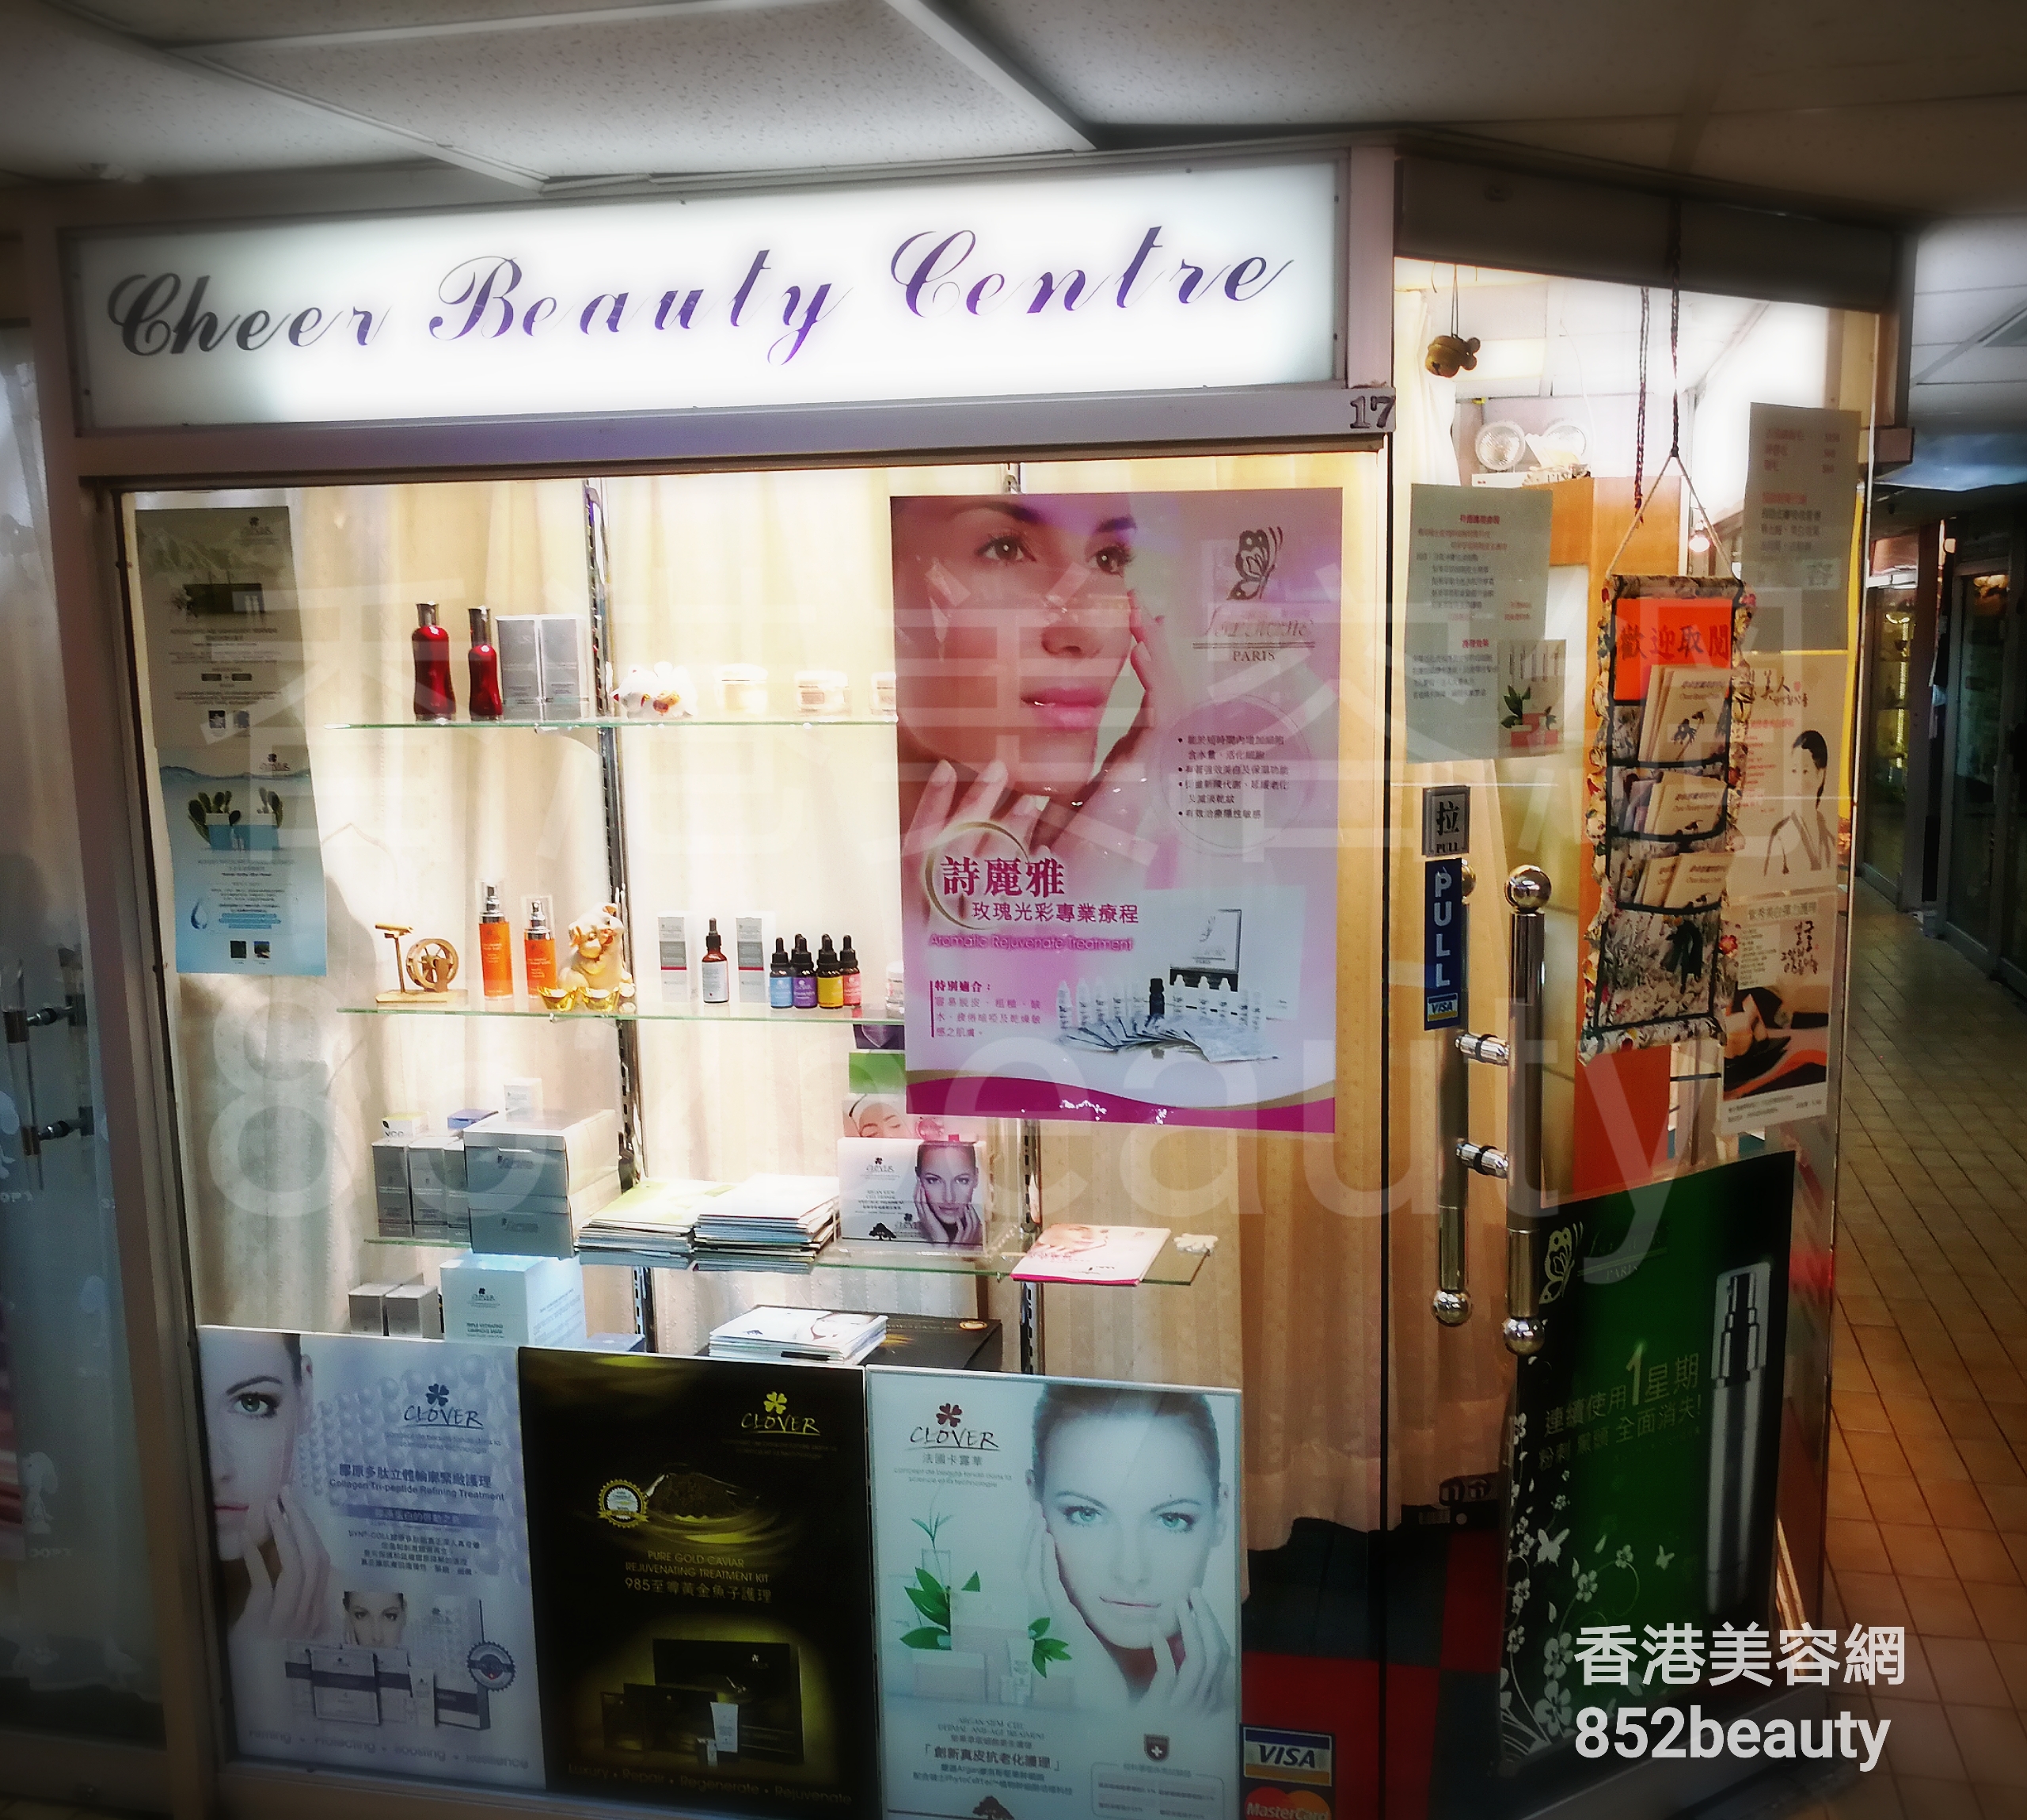 香港美容網 Hong Kong Beauty Salon 美容院 / 美容師: Cheer Beauty Centre